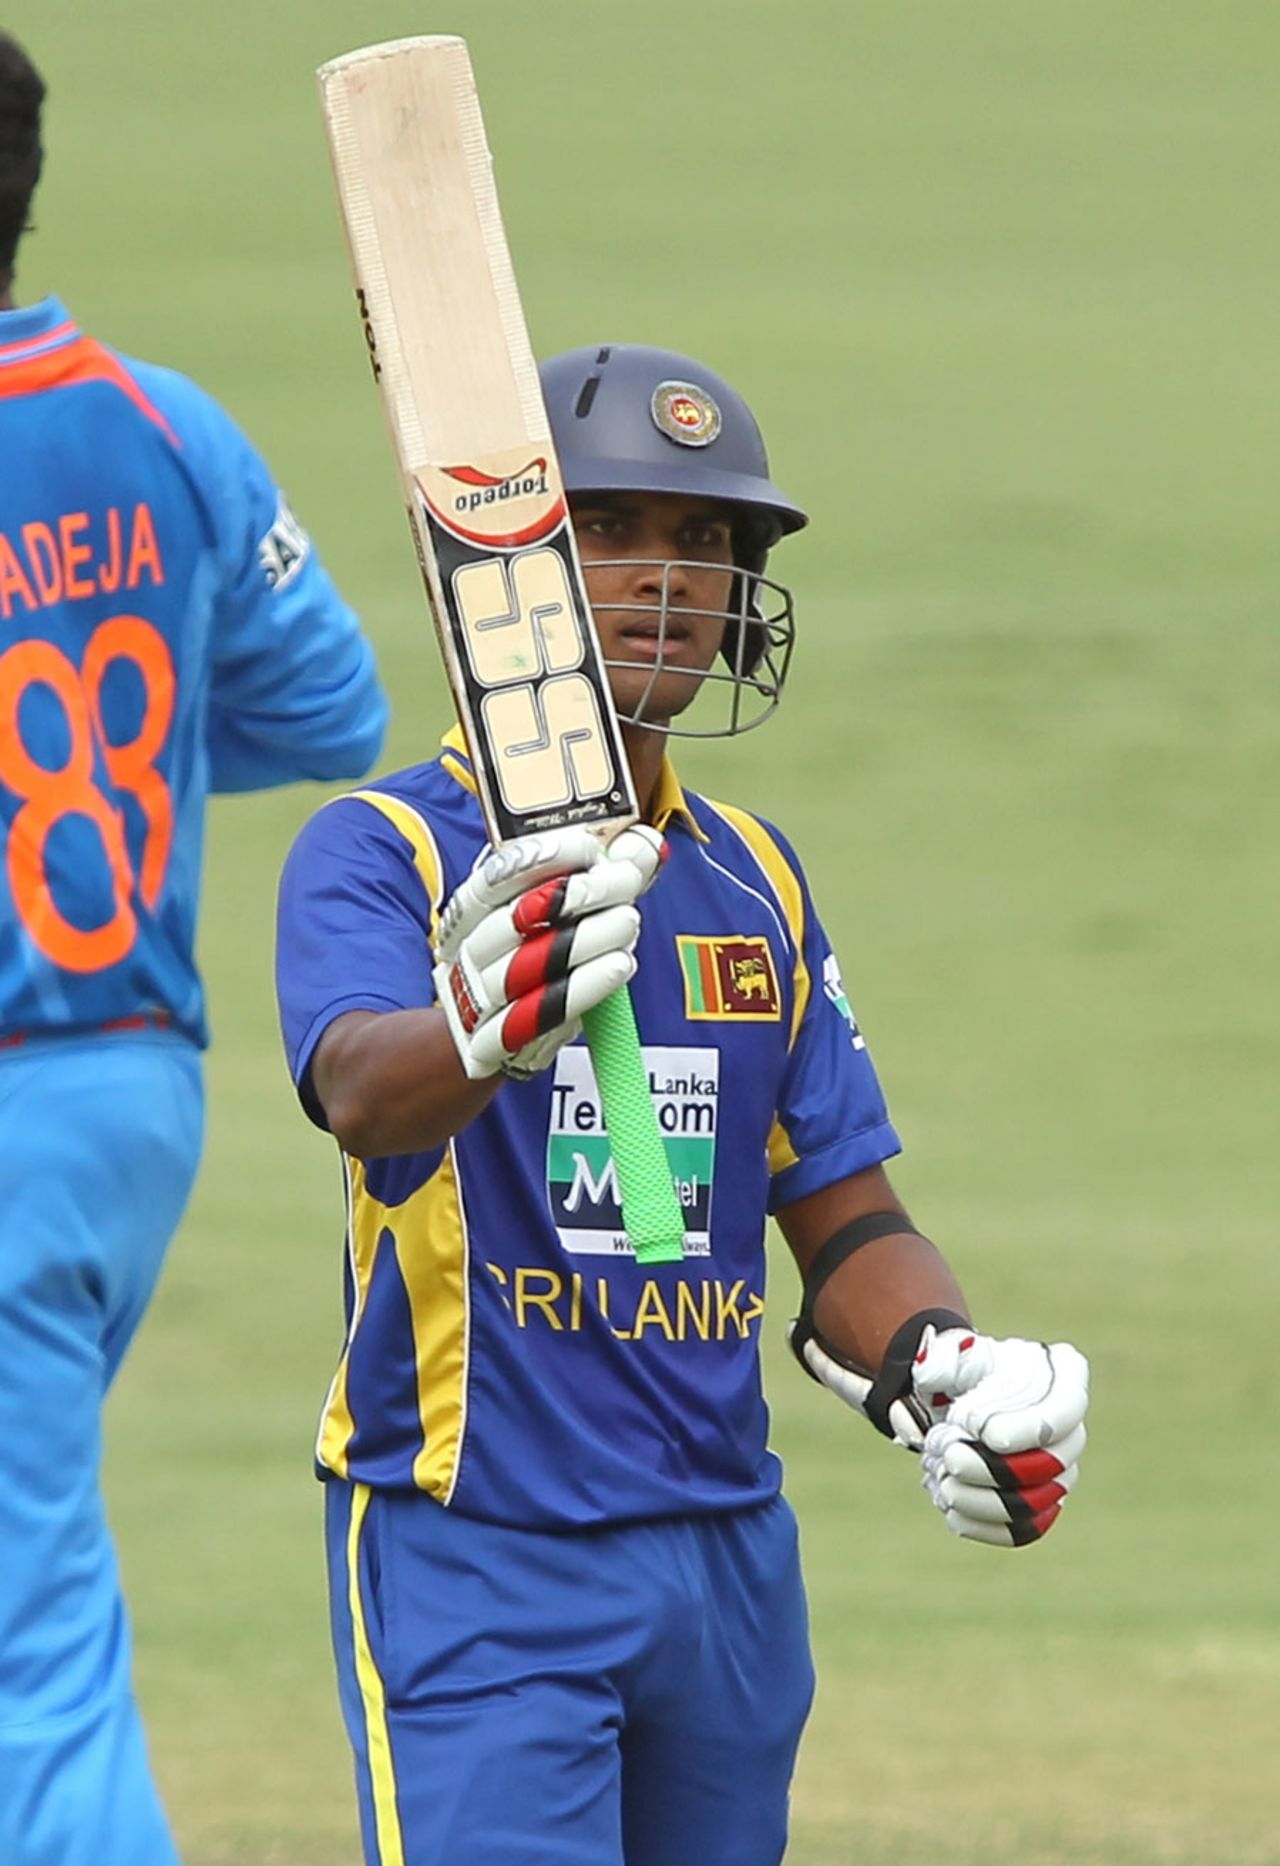 Dinesh Chandimal brings up his half-century, India v Sri Lanka, Commonwealth Bank Series, Adelaide, February 14, 2012